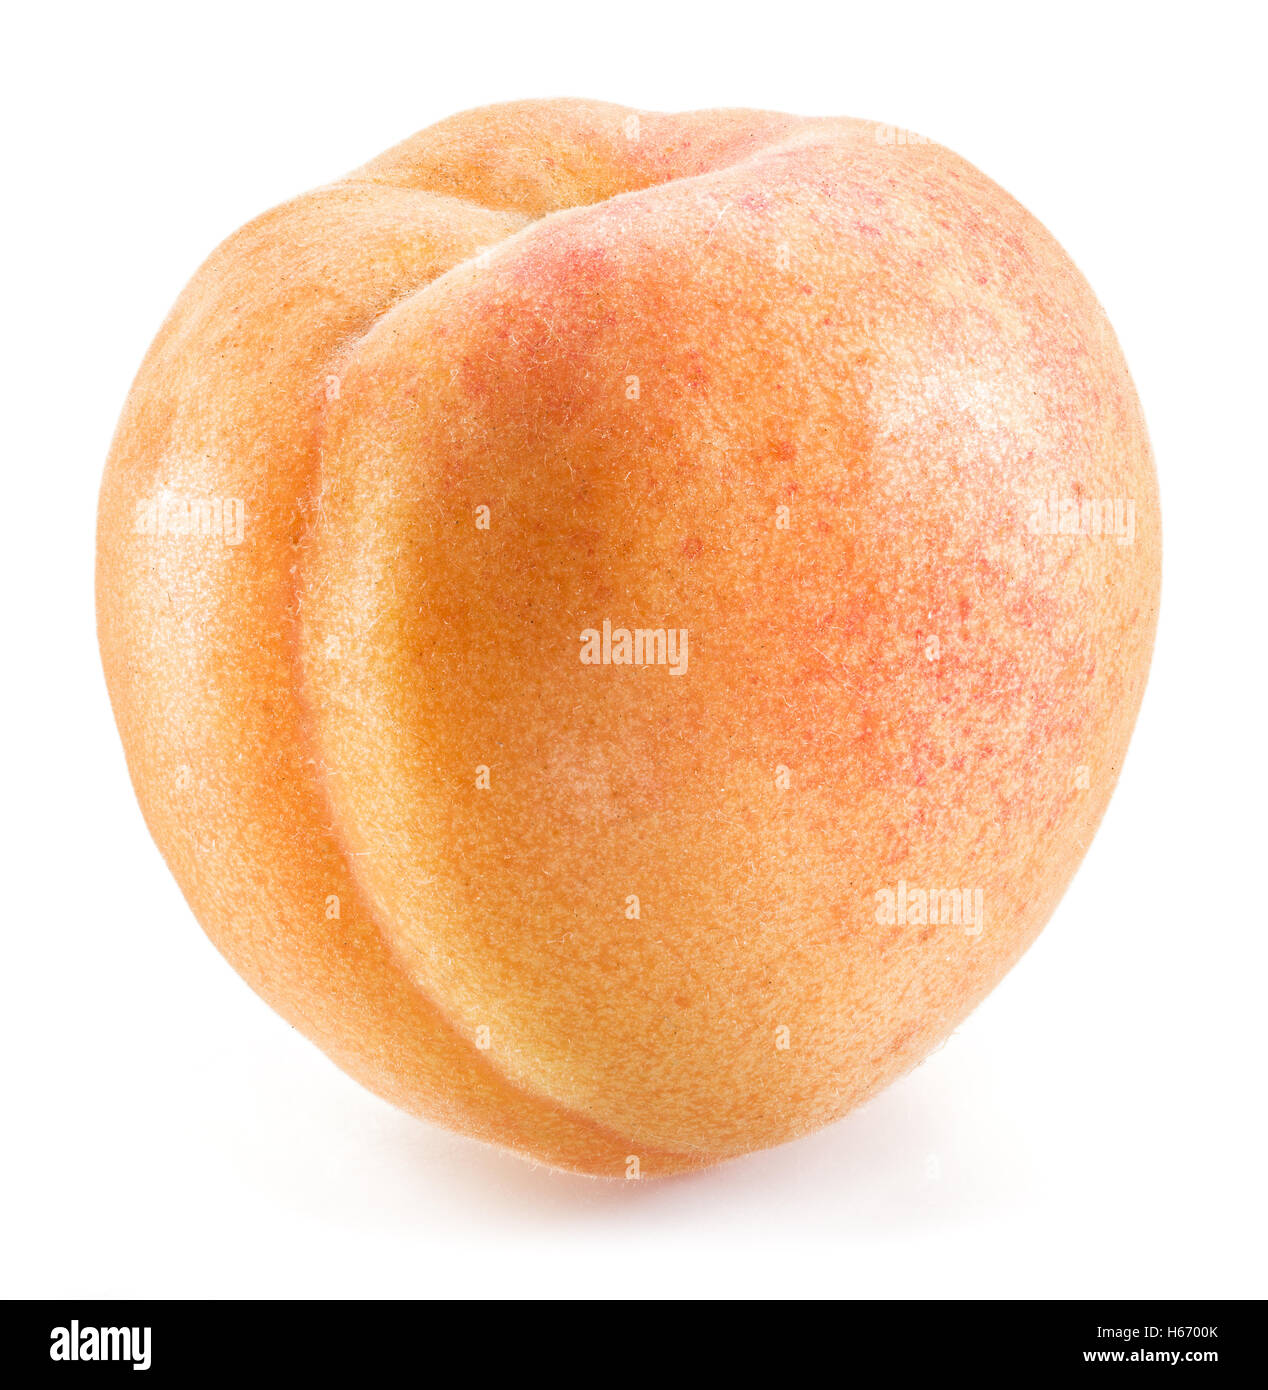 Apricot fruit on the white background. Stock Photo